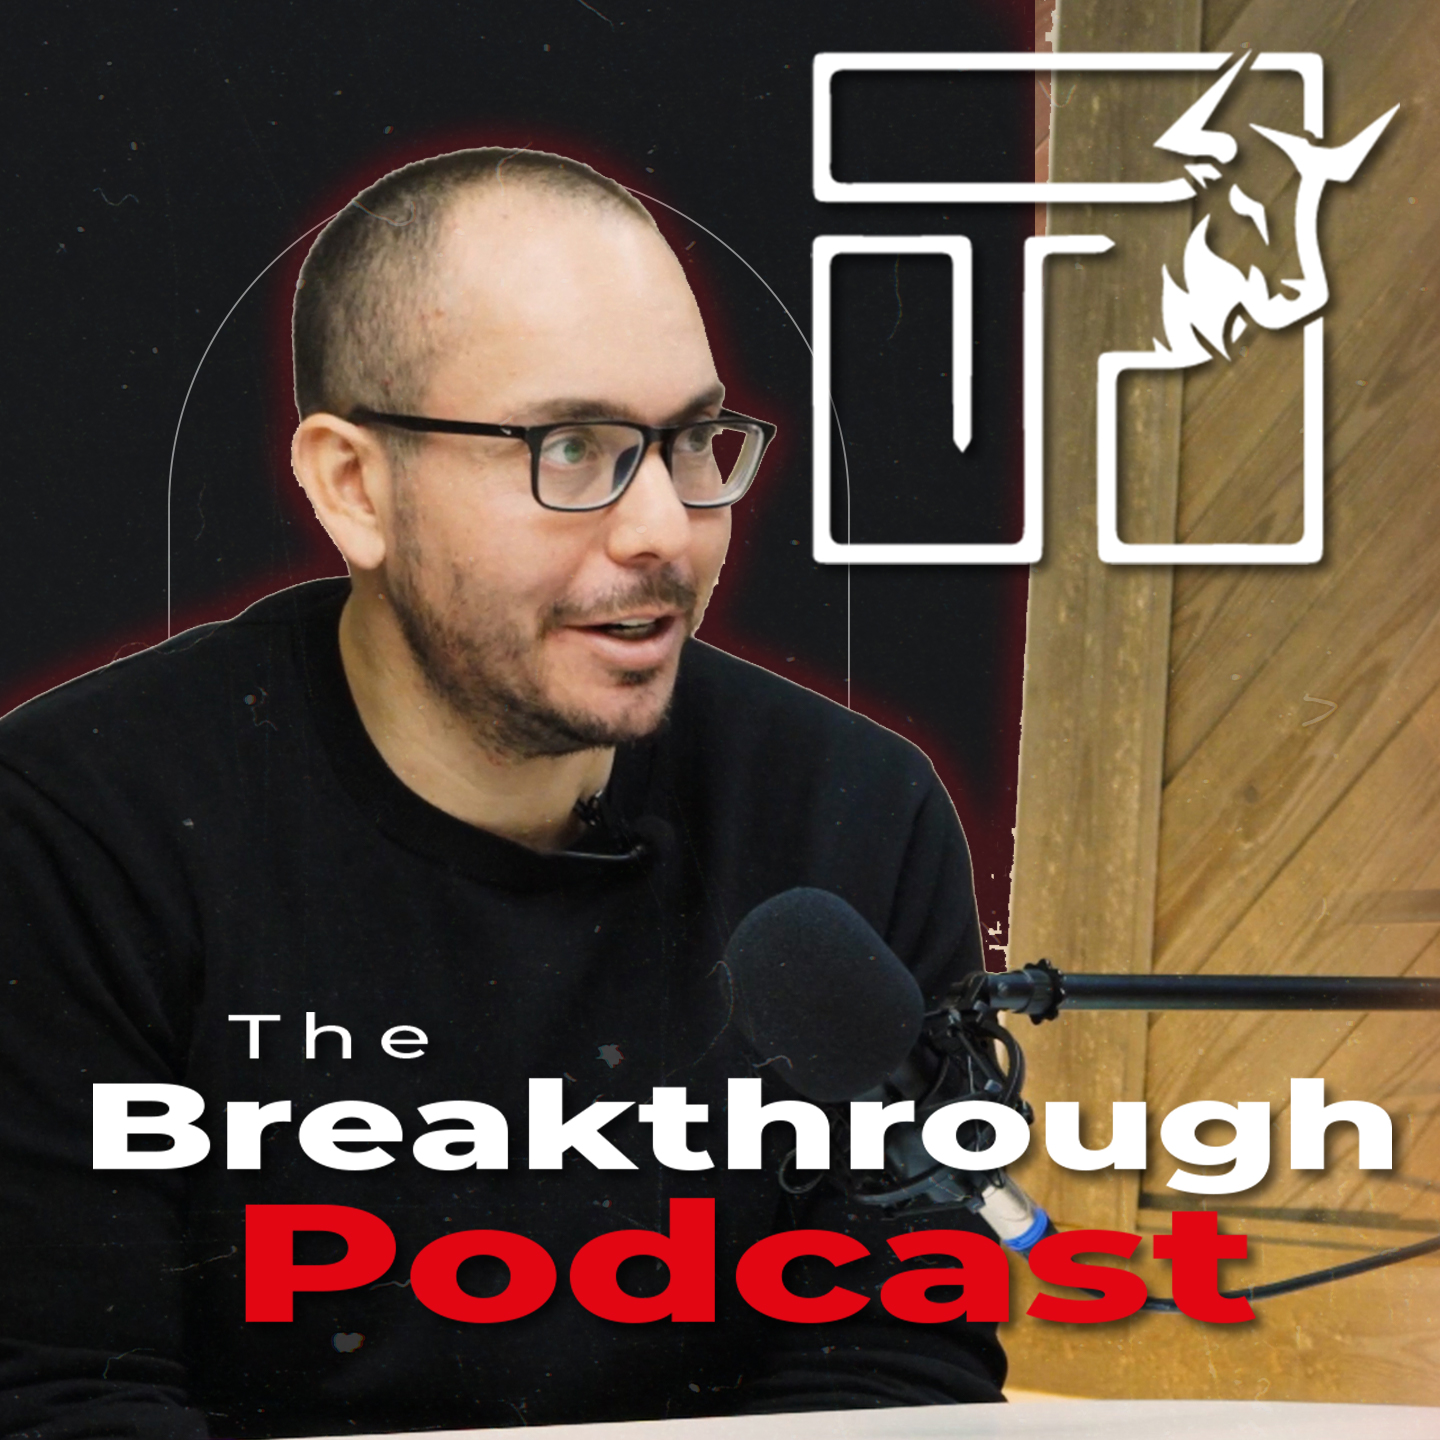 The Breakthrough Podcast